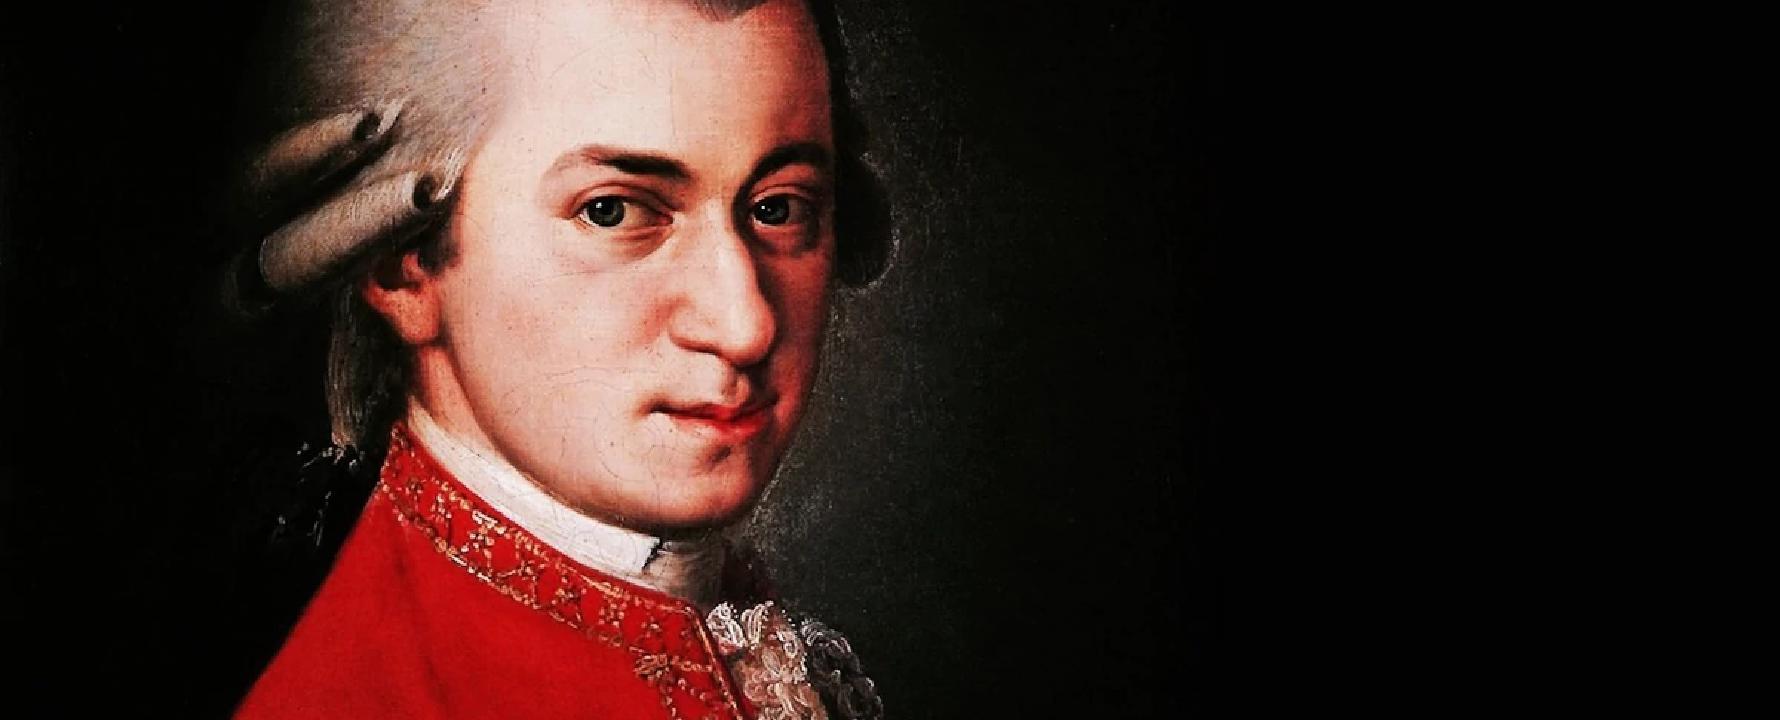 Fotografía promocional de Wolfgang Amadeus Mozart